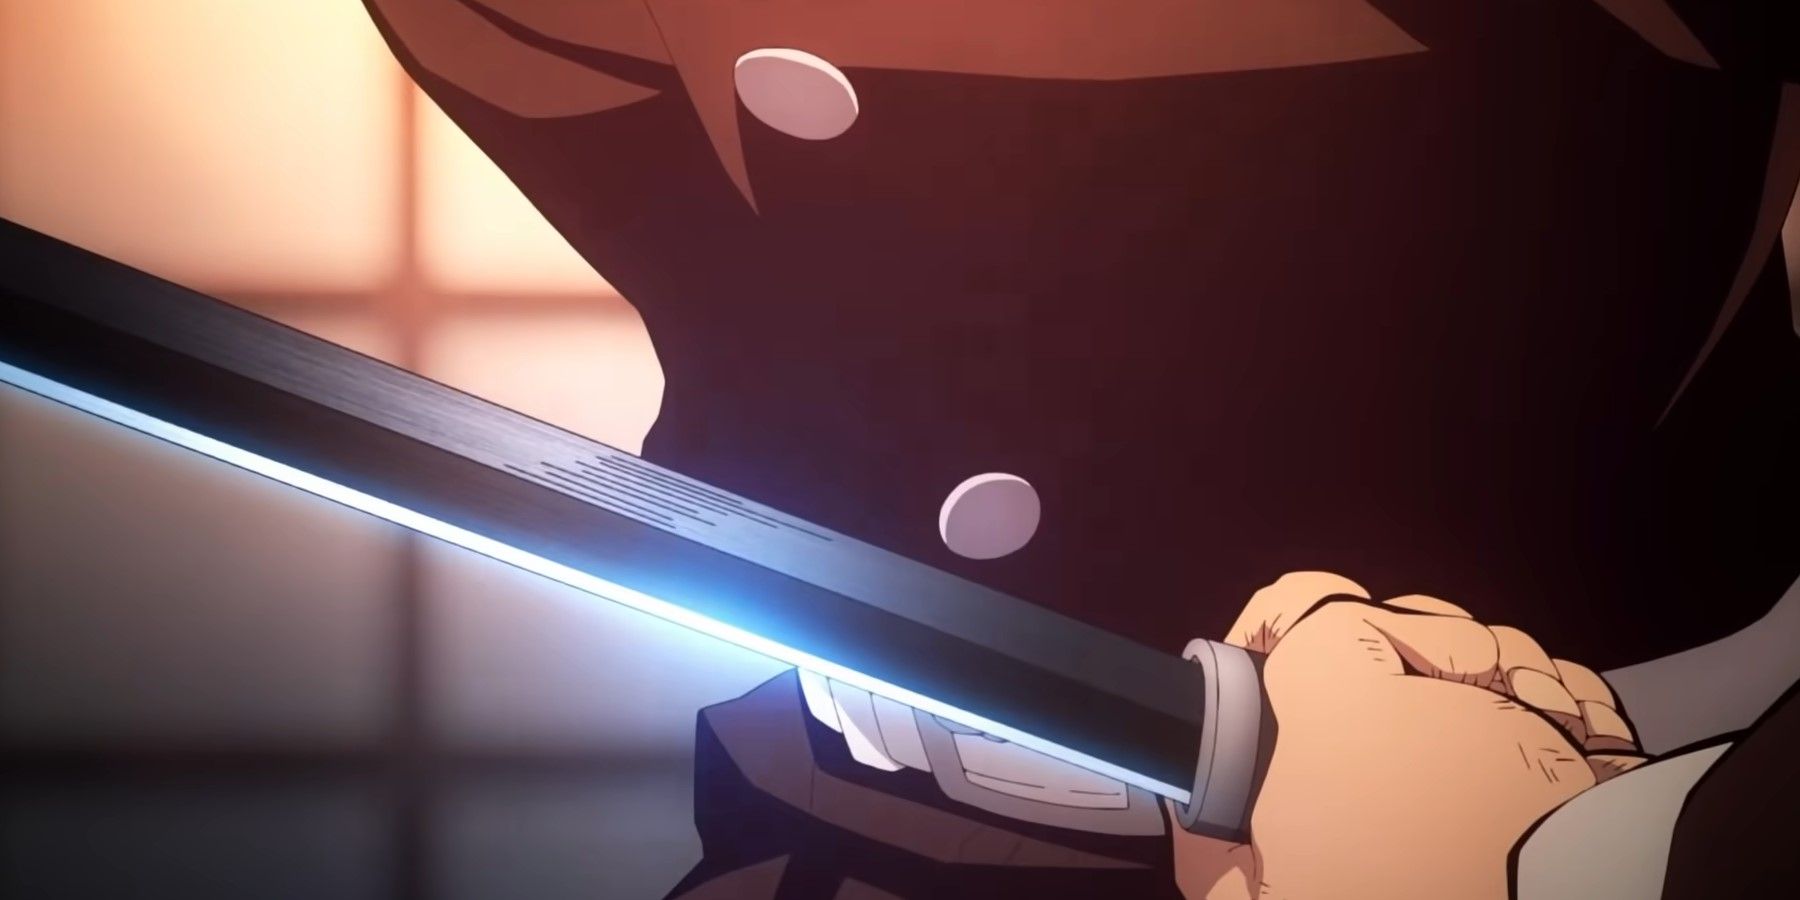 Anime sword by Hyfigh on DeviantArt